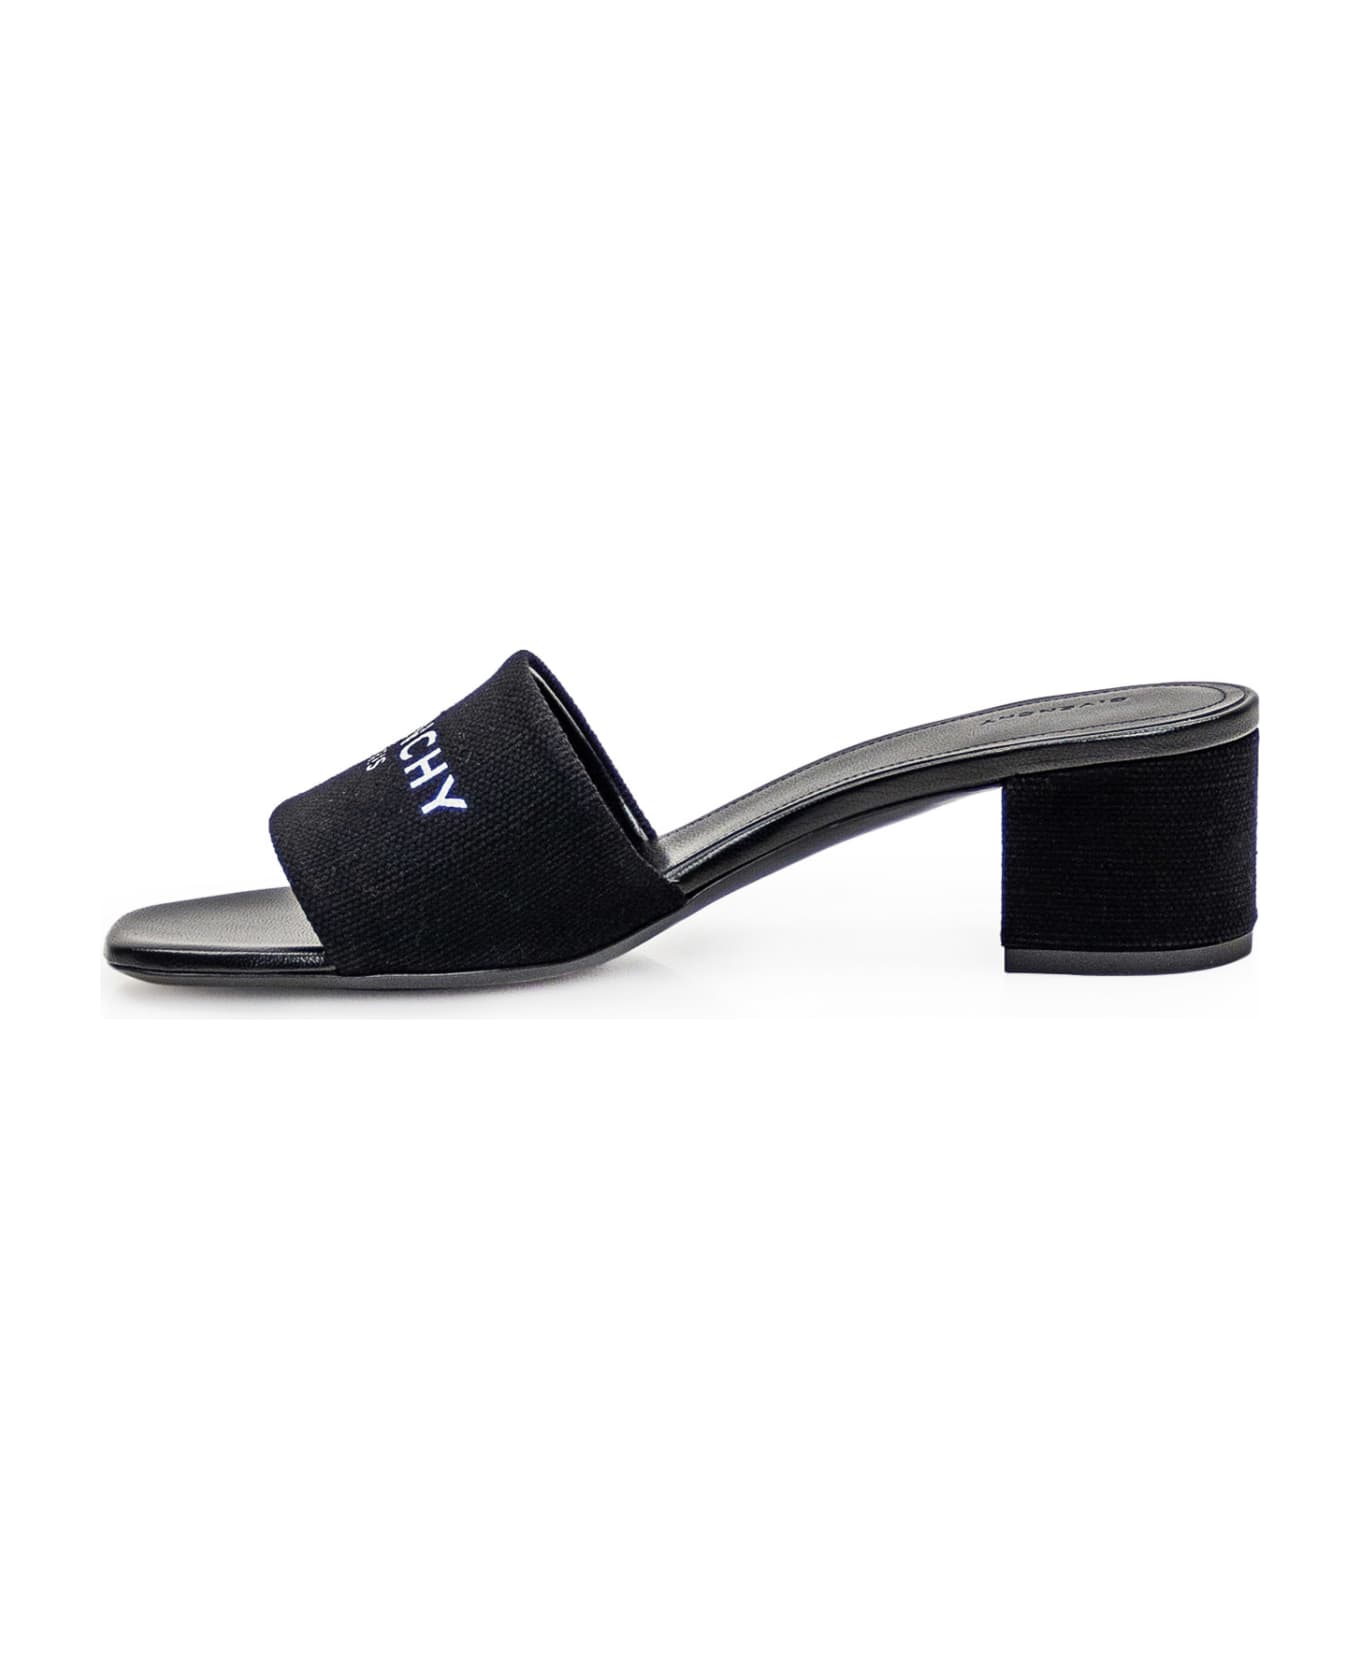 Givenchy 4g Sandals - black